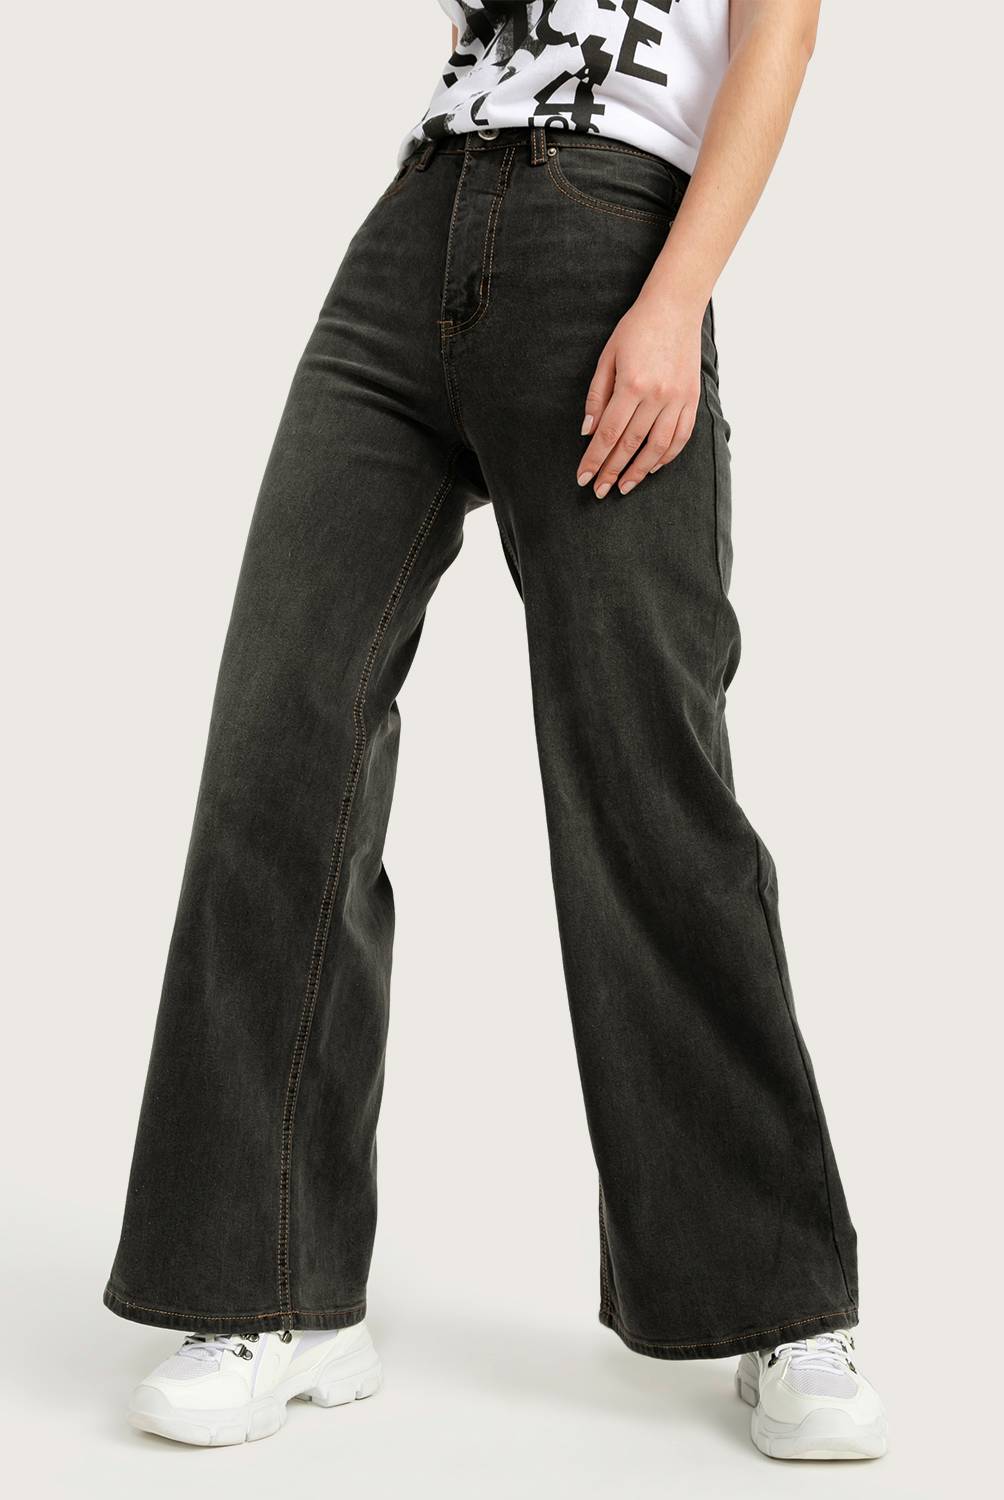 AMERICANINO - Jeans de Algodón Mujer